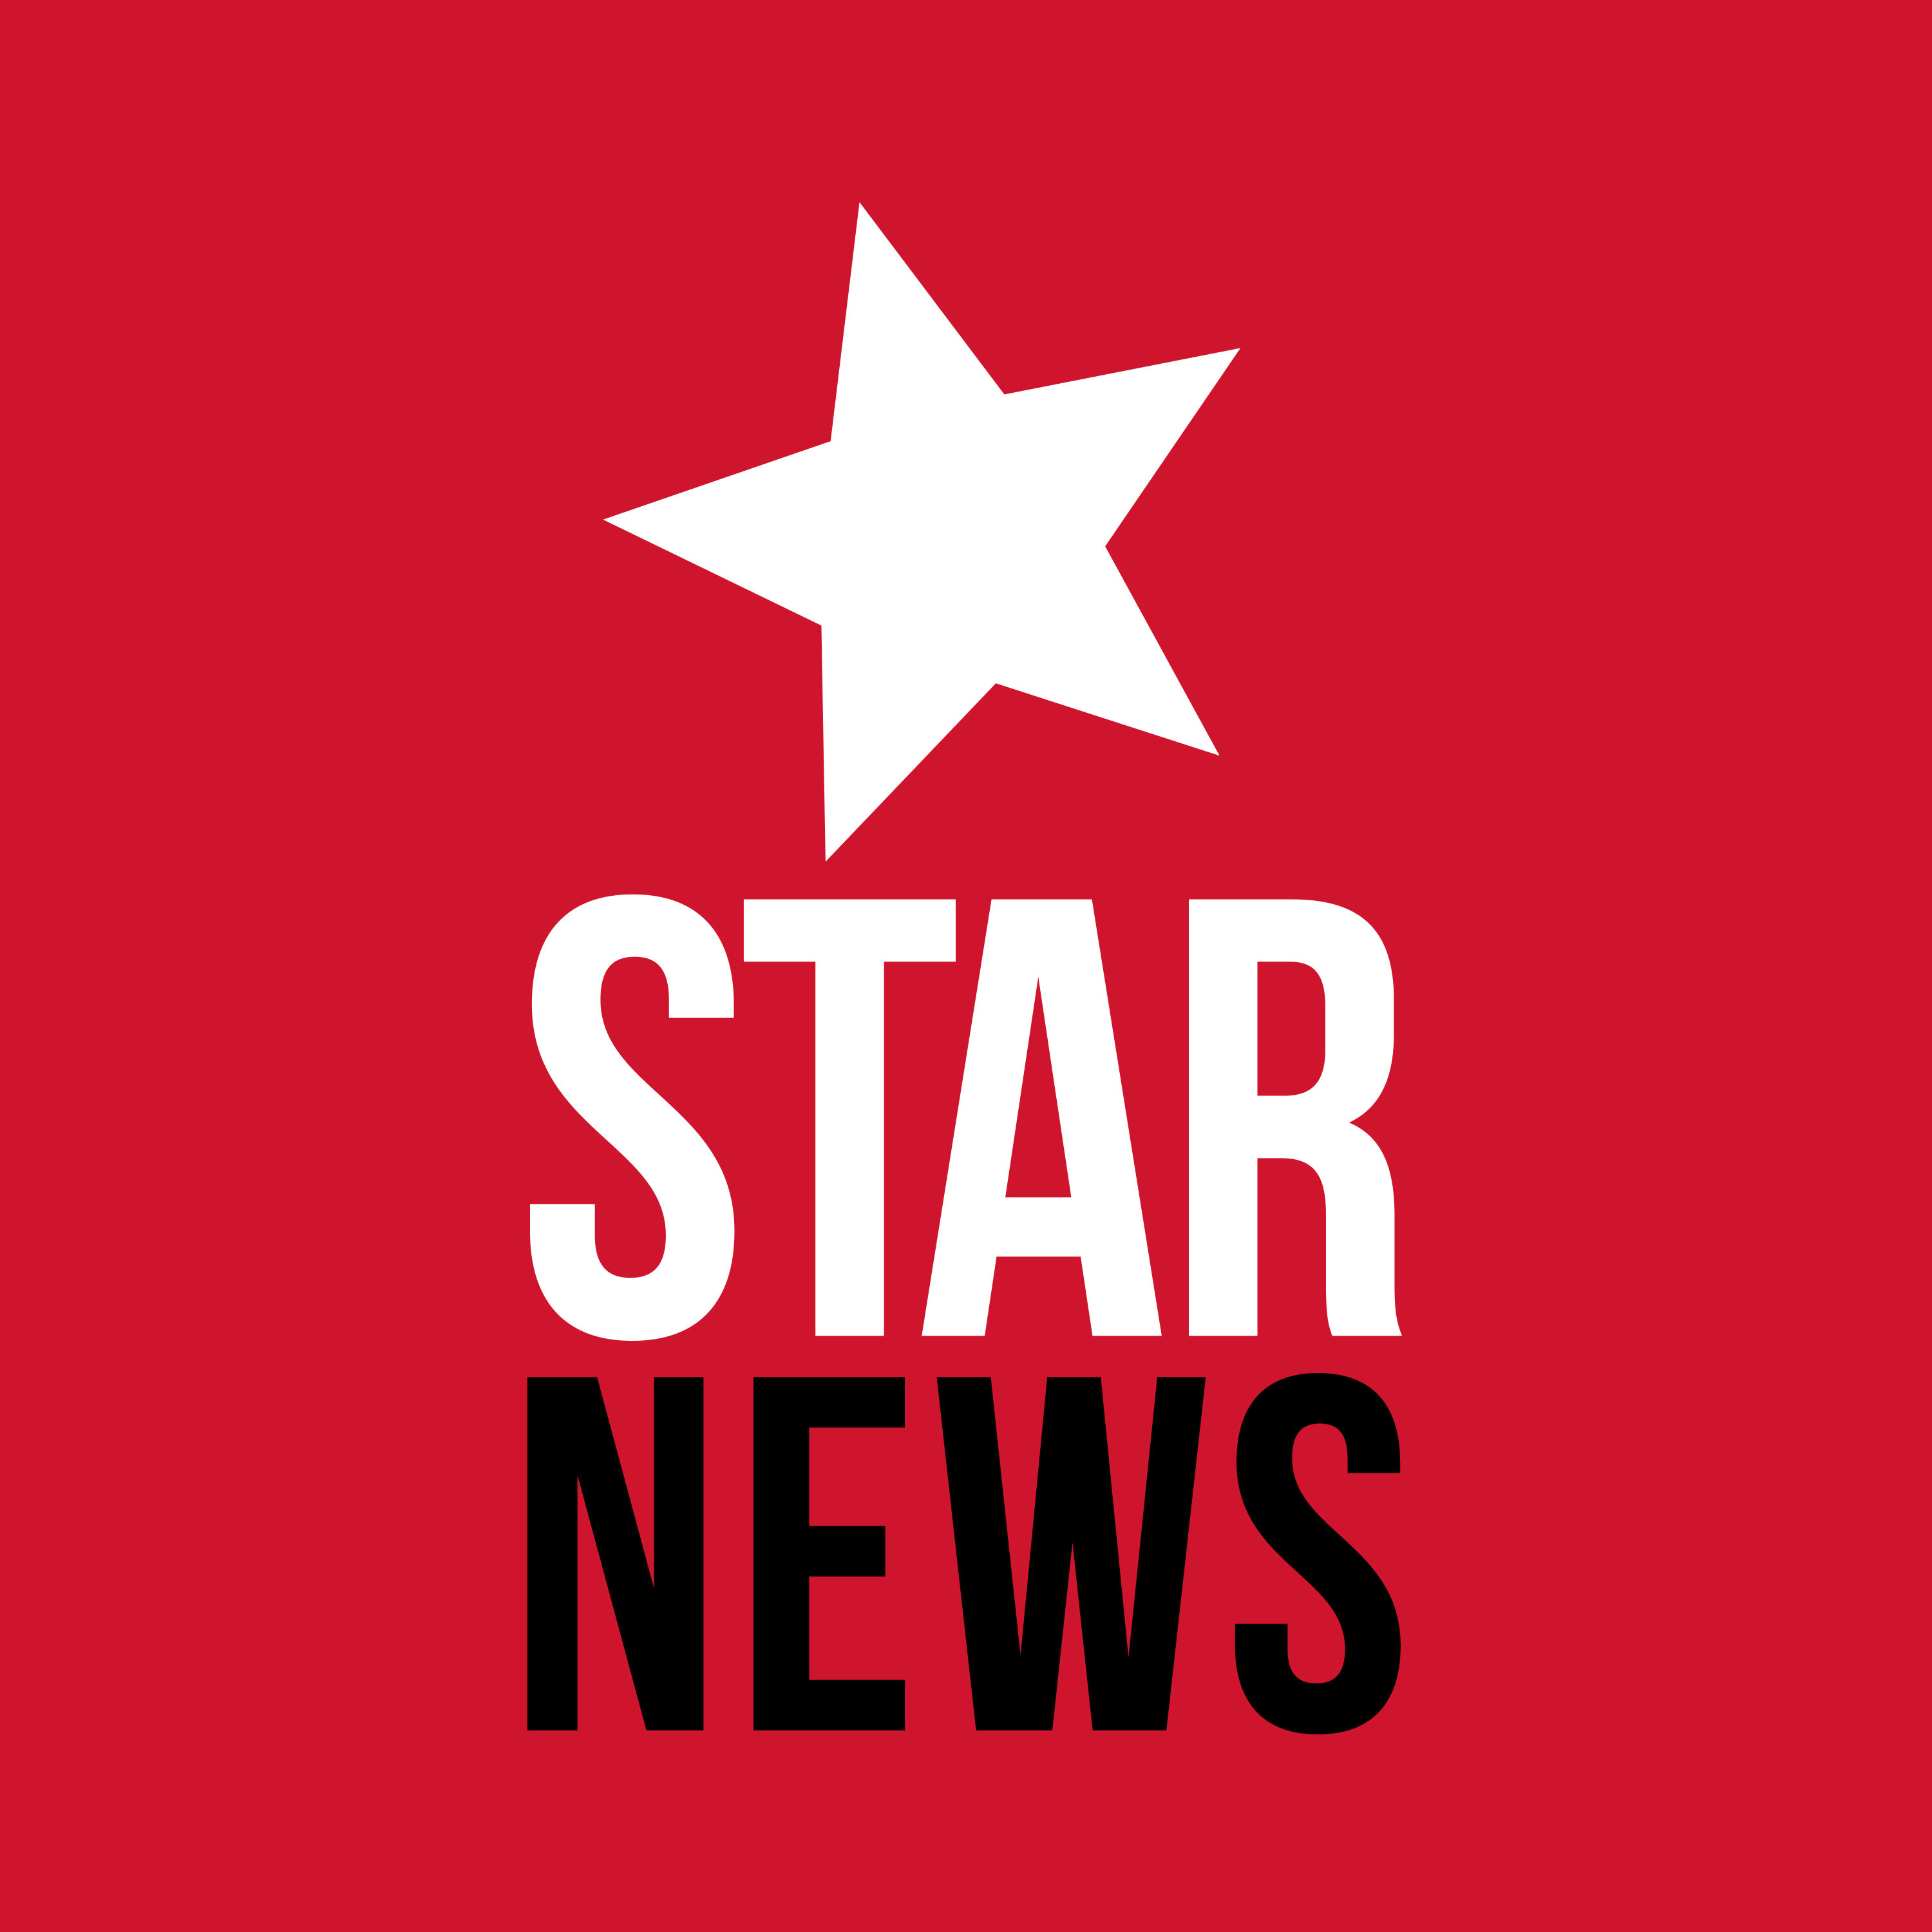 Star News Briefing